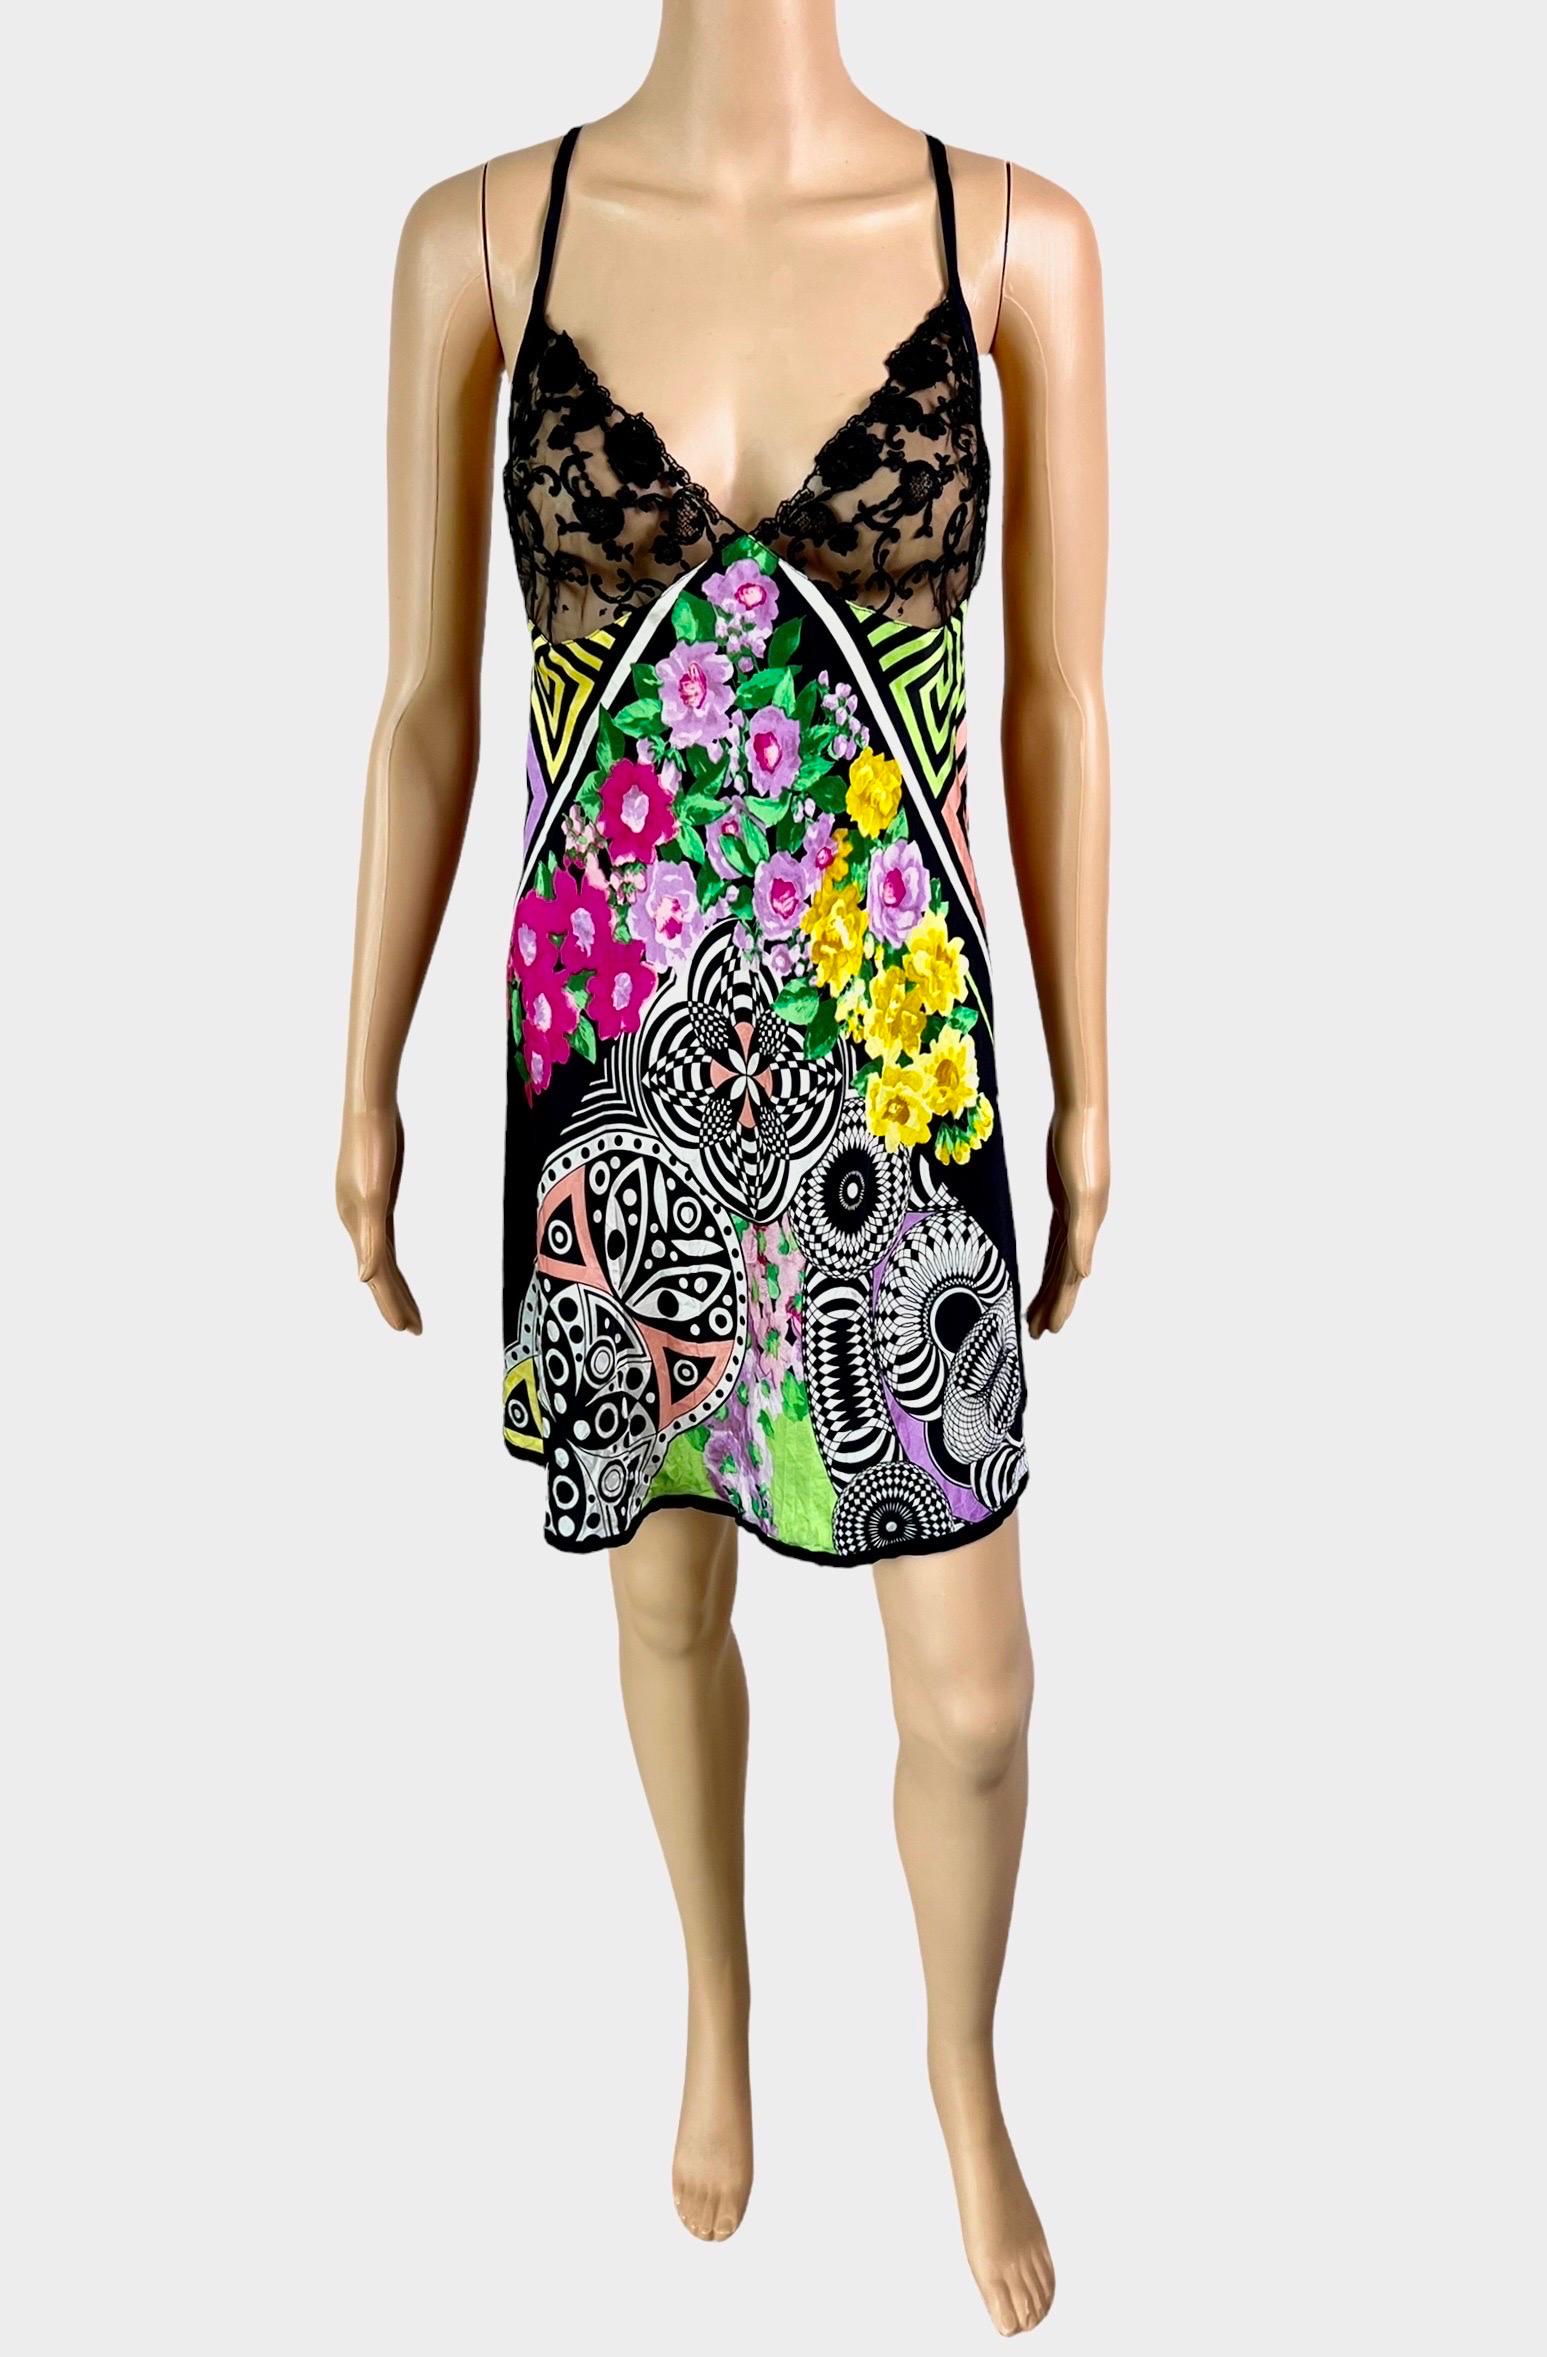 Gianni Versace S/S 1993 Sheer Lace Bra Floral Print Slip Silk Mini Dress For Sale 4